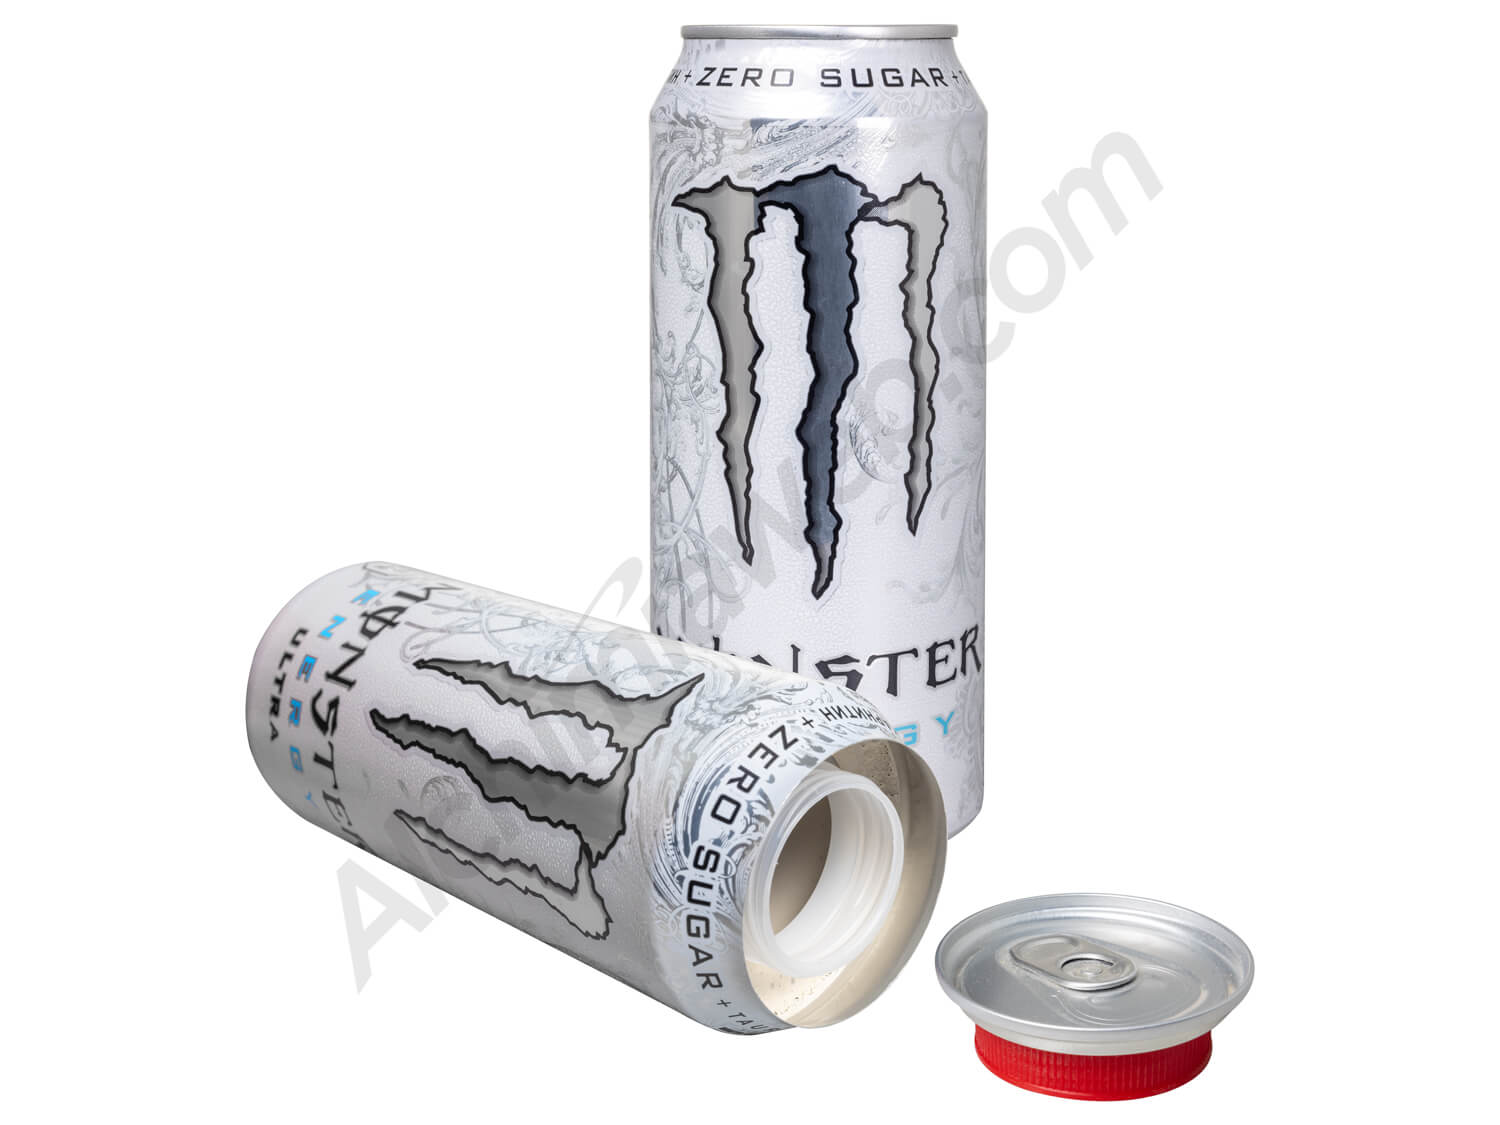 Vente de Canette Monster Energy avec cachette